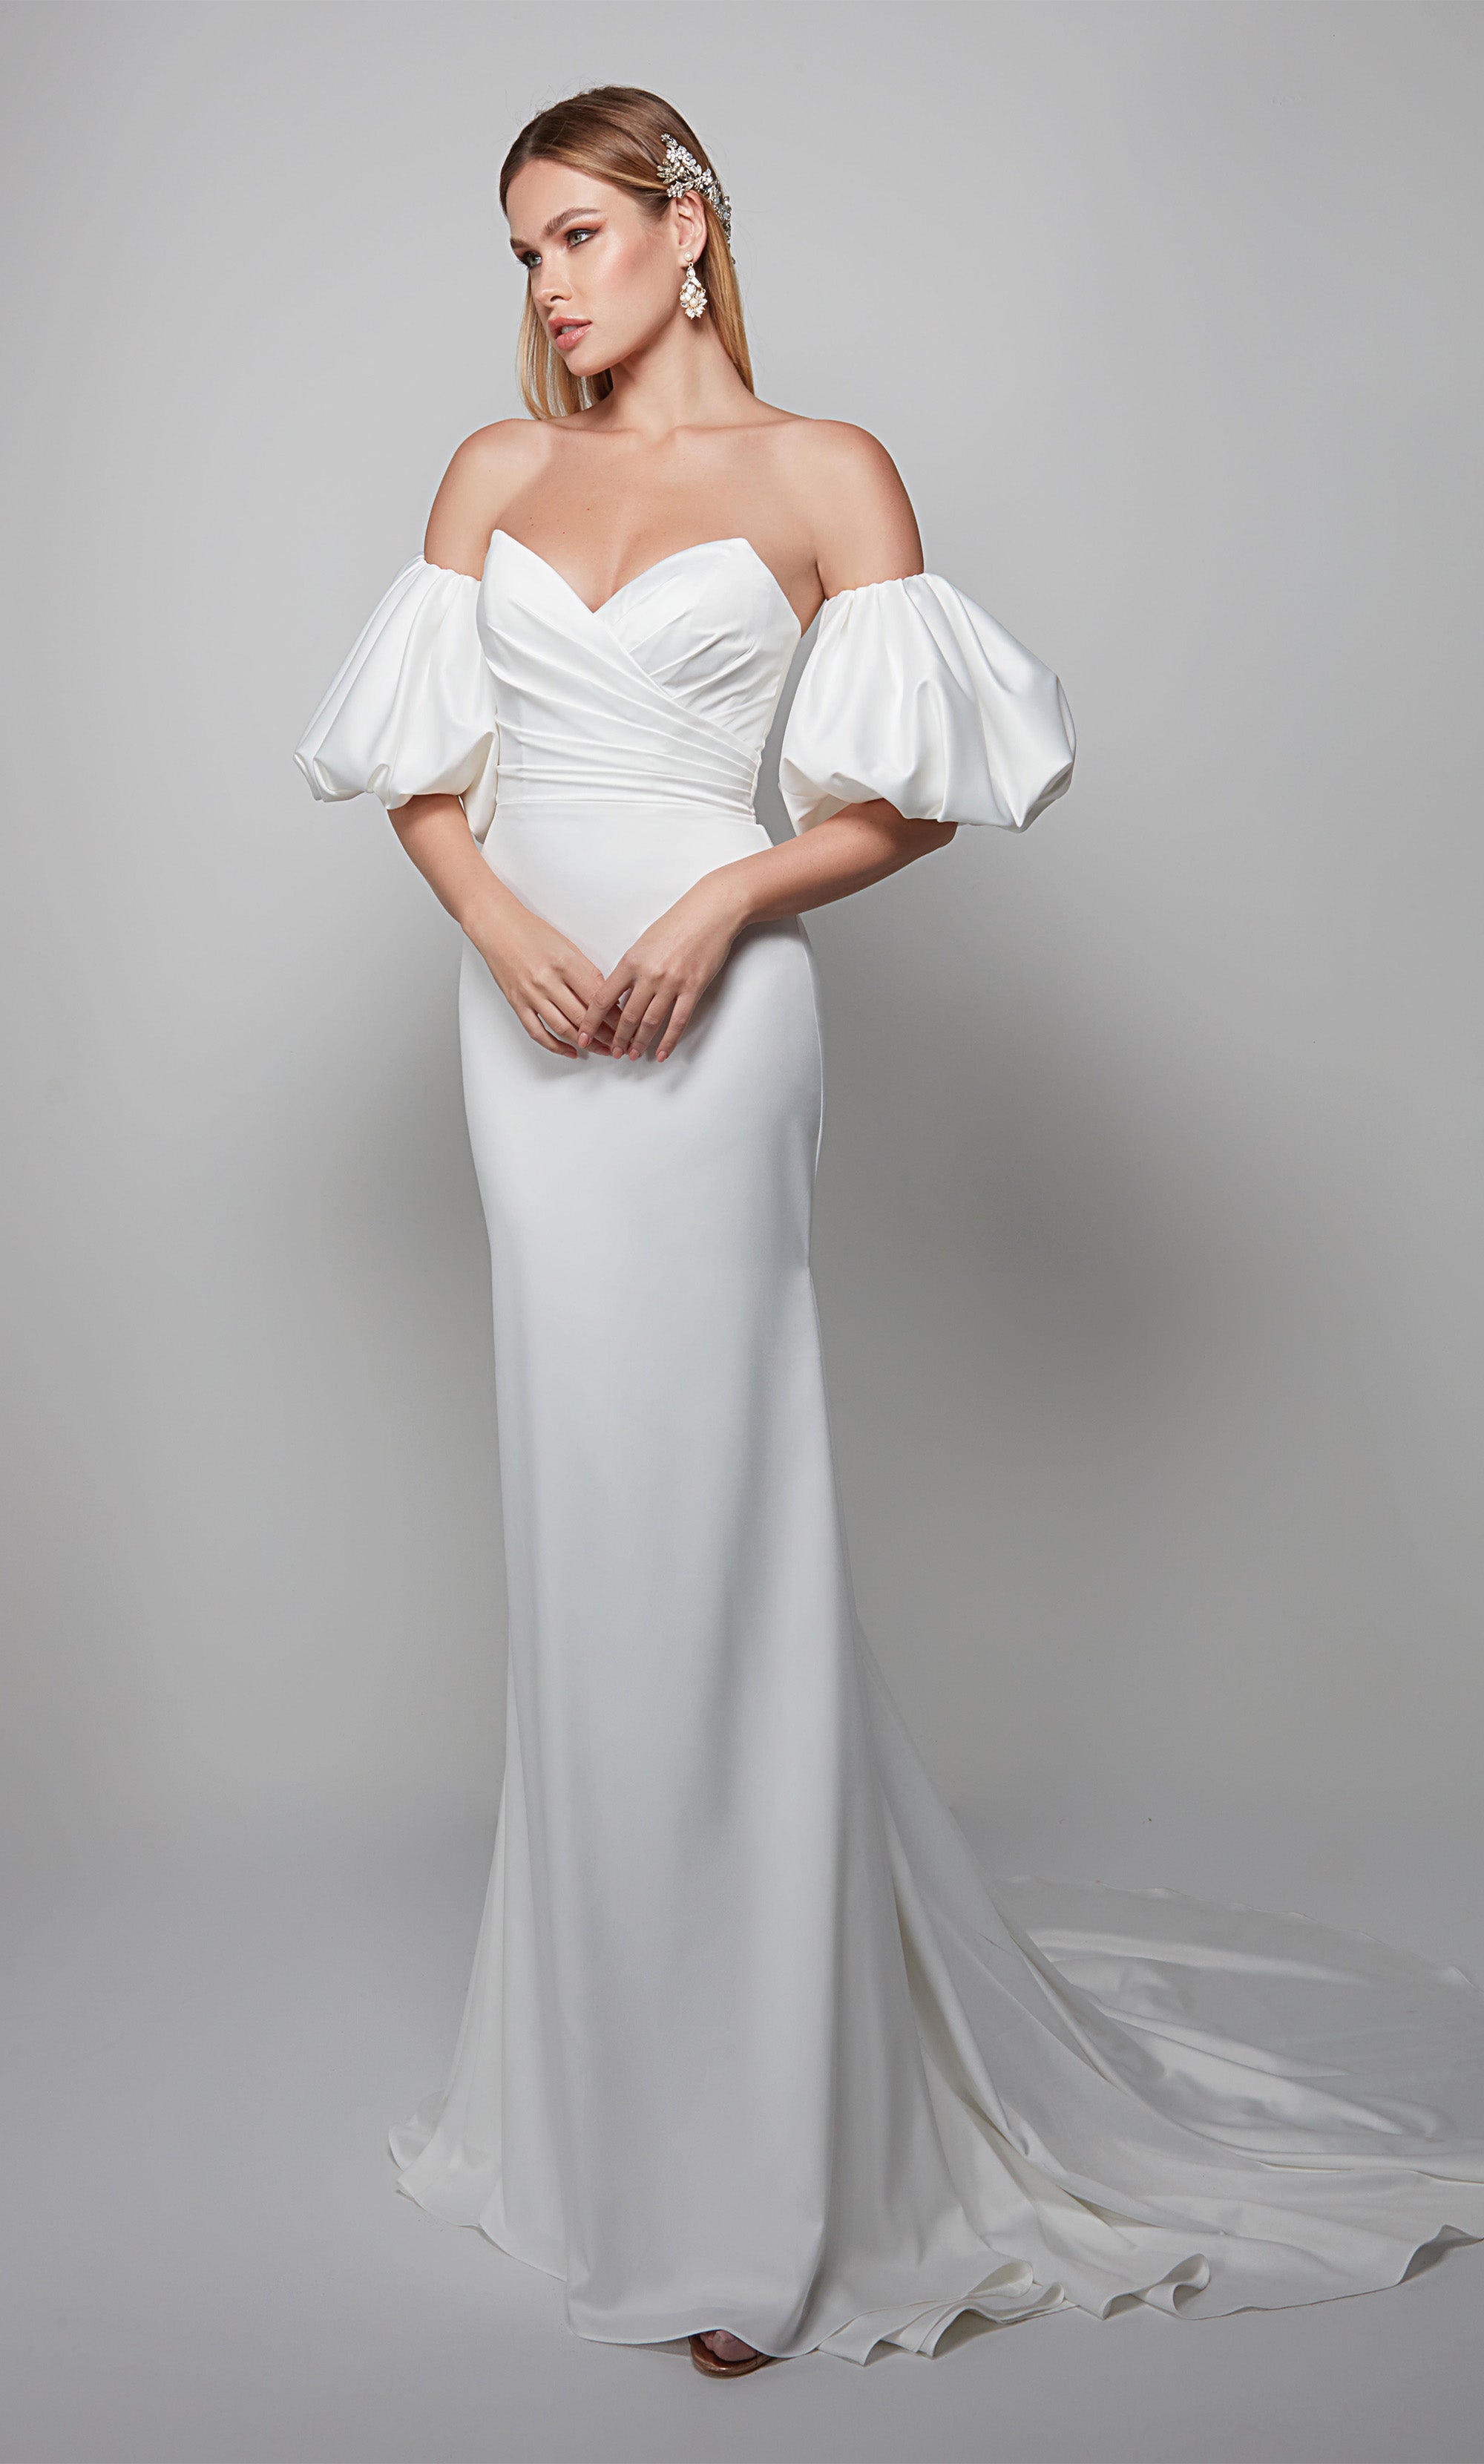 Simple Wedding Dresses & Bridal Gowns丨Azazie